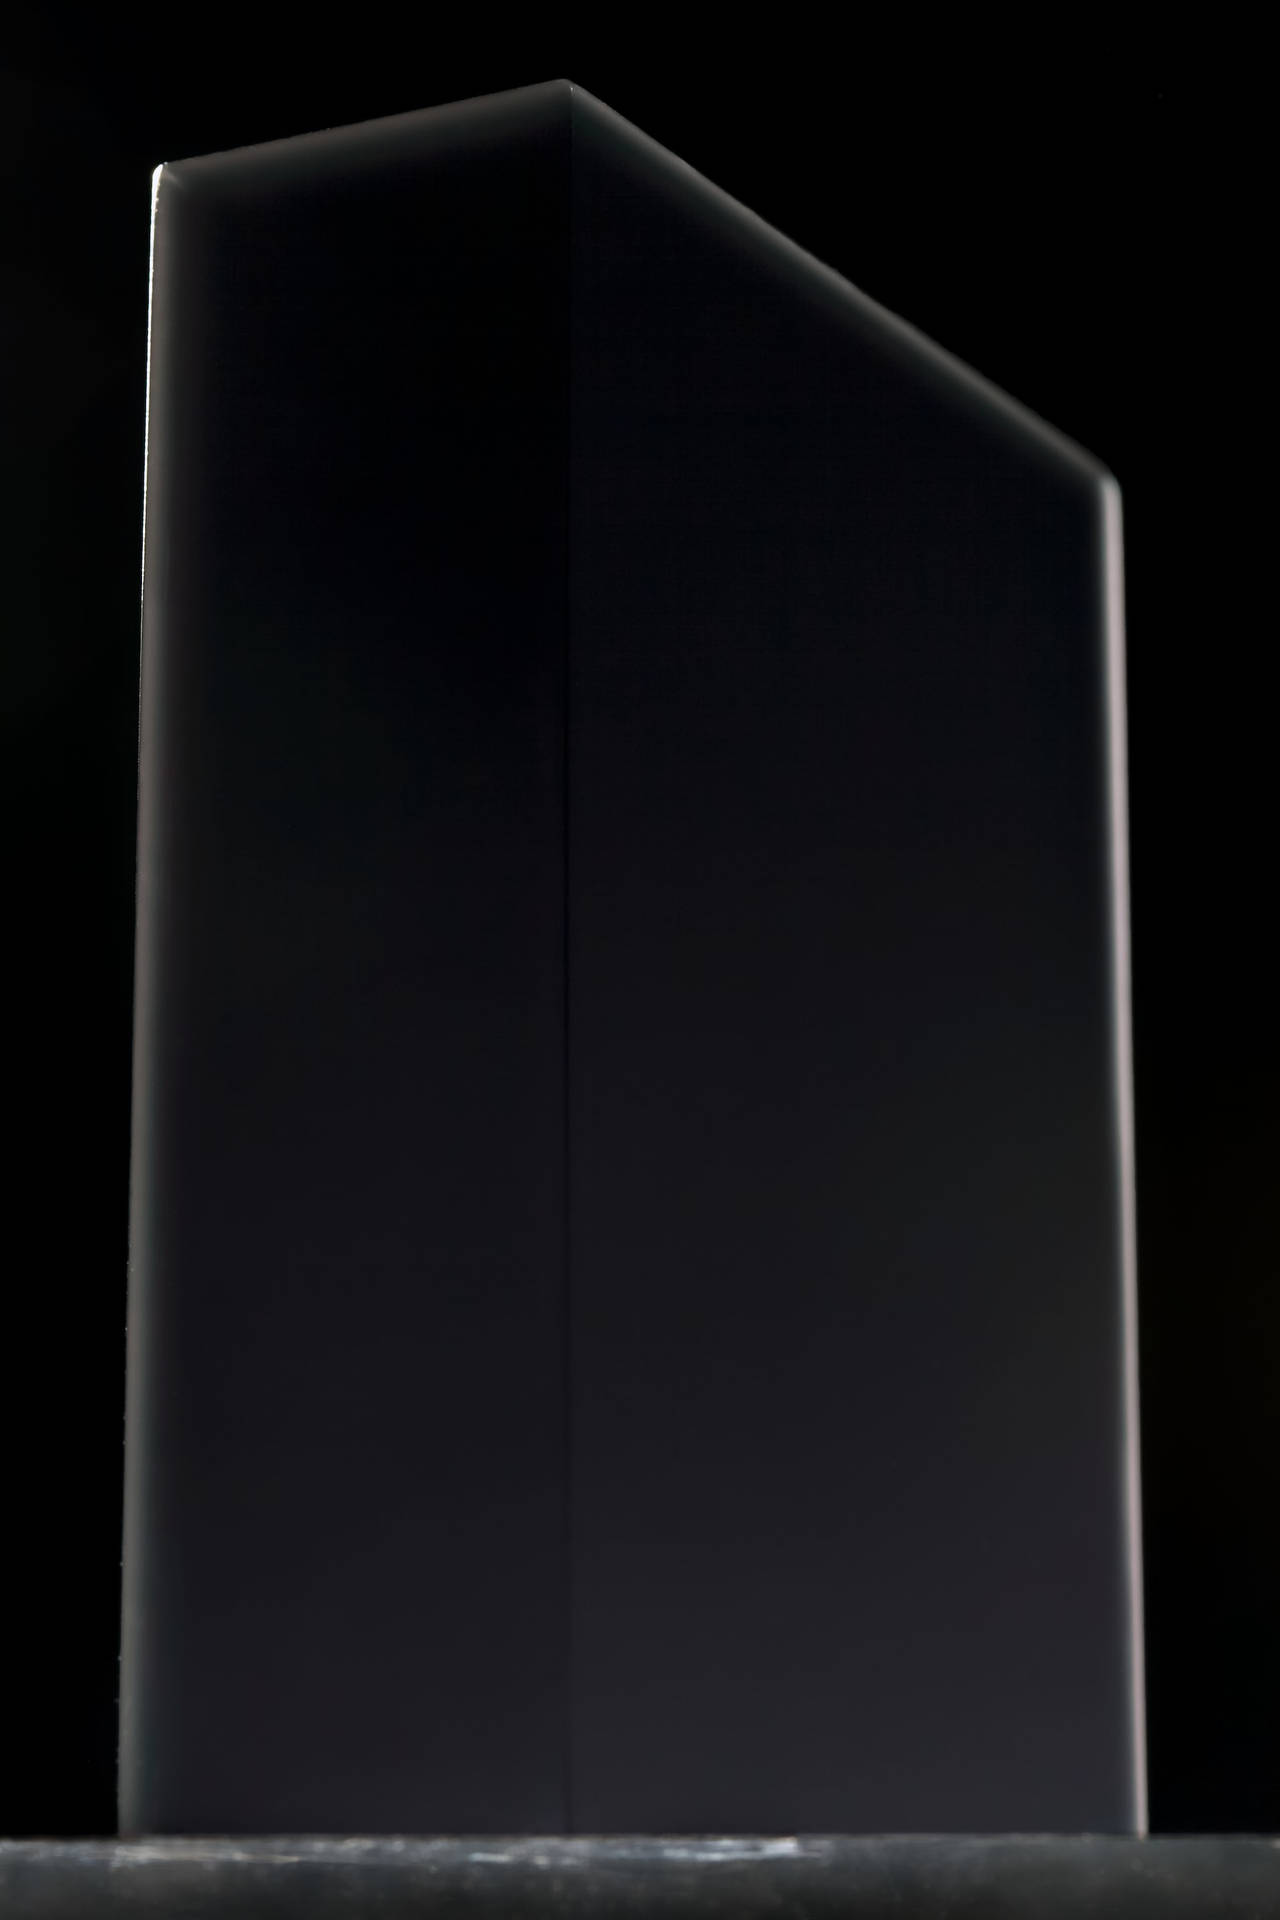 Monolith Black Aesthetic Tumblr Iphone Background